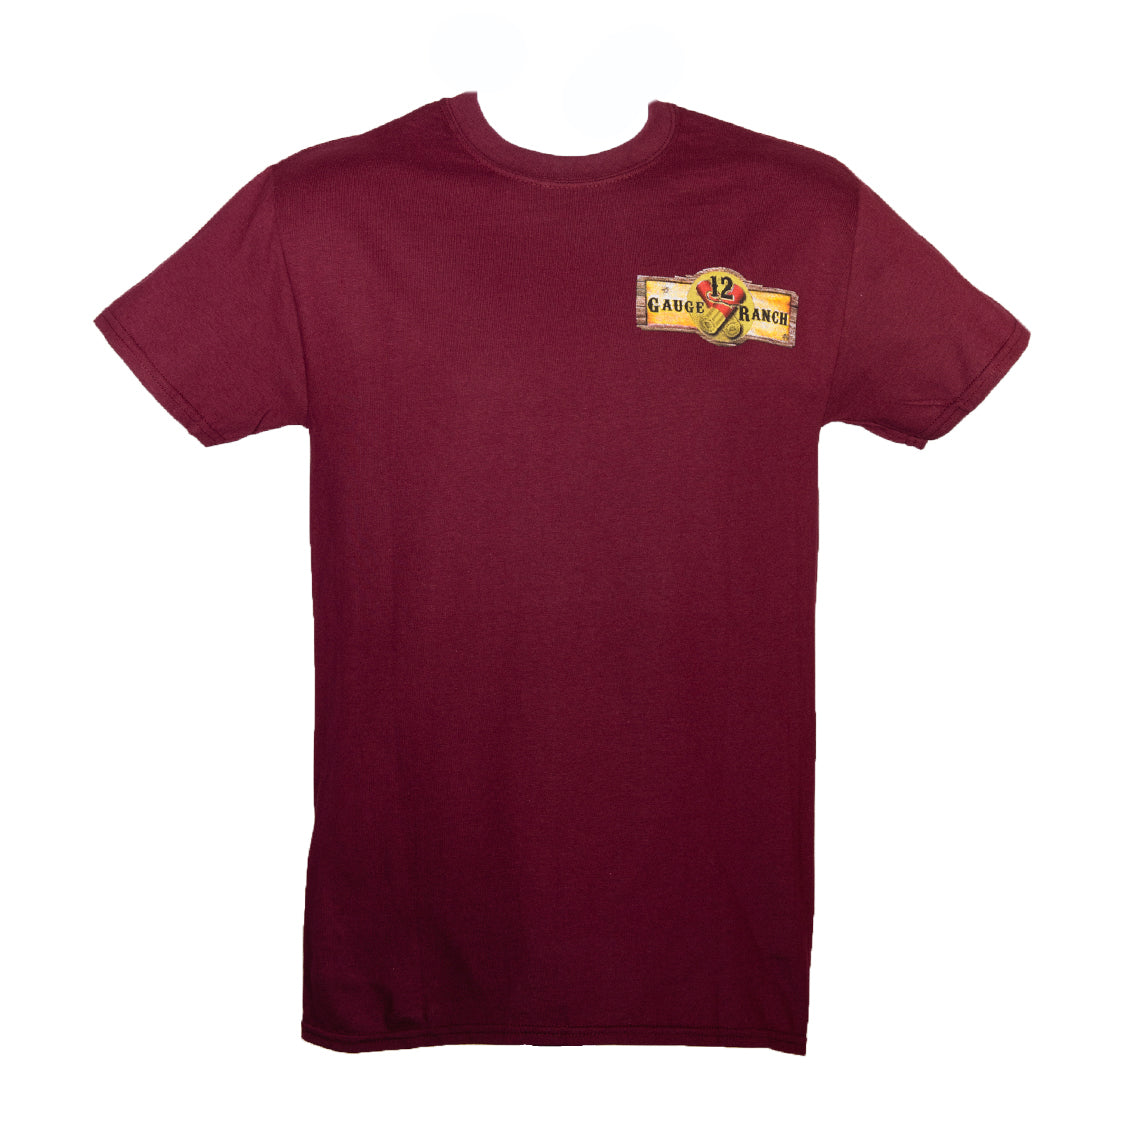 12 Gauge Ranch Maroon Short Sleeve Shirt (SSGMR101) – 12 Gauge Ranch Ranch